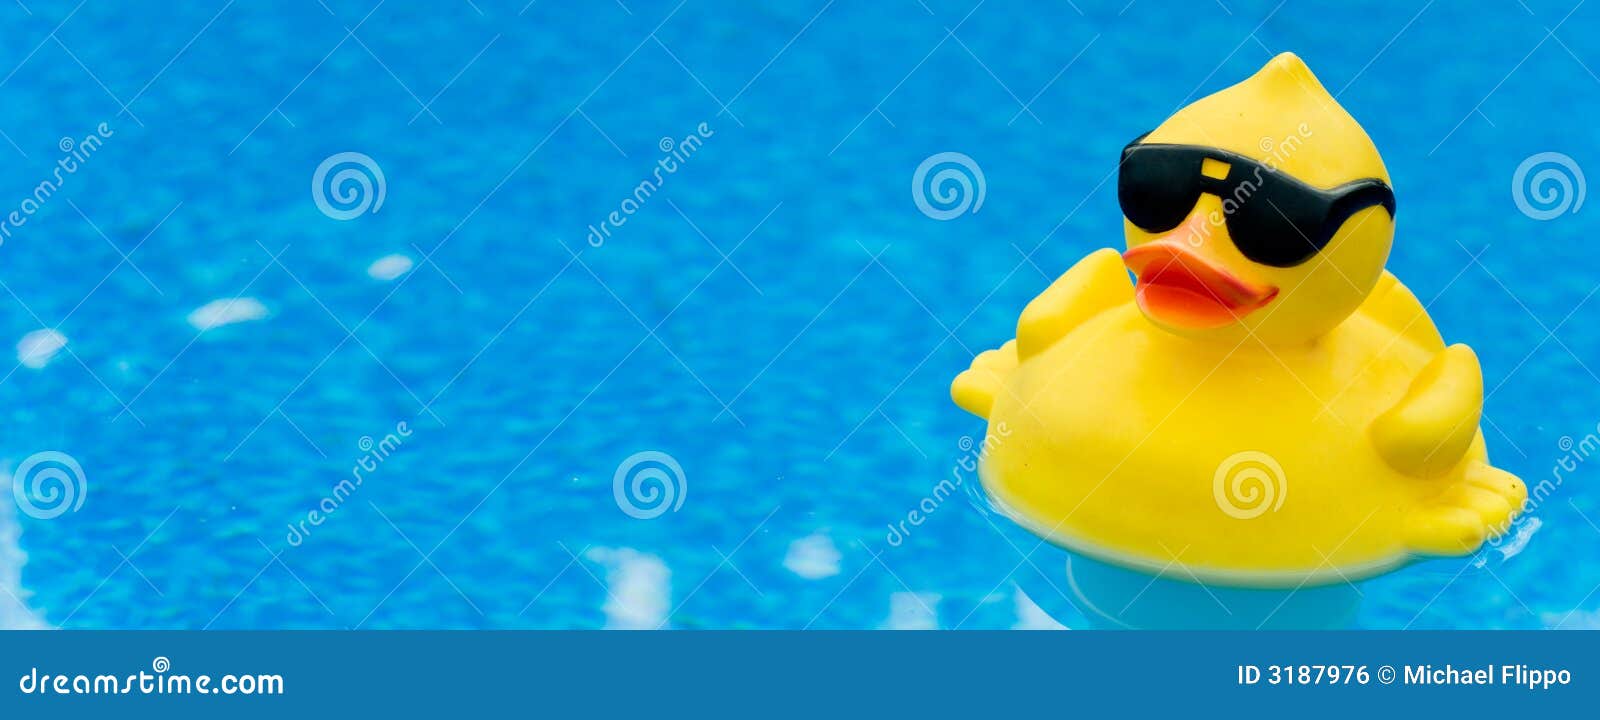 rubber duck on blue